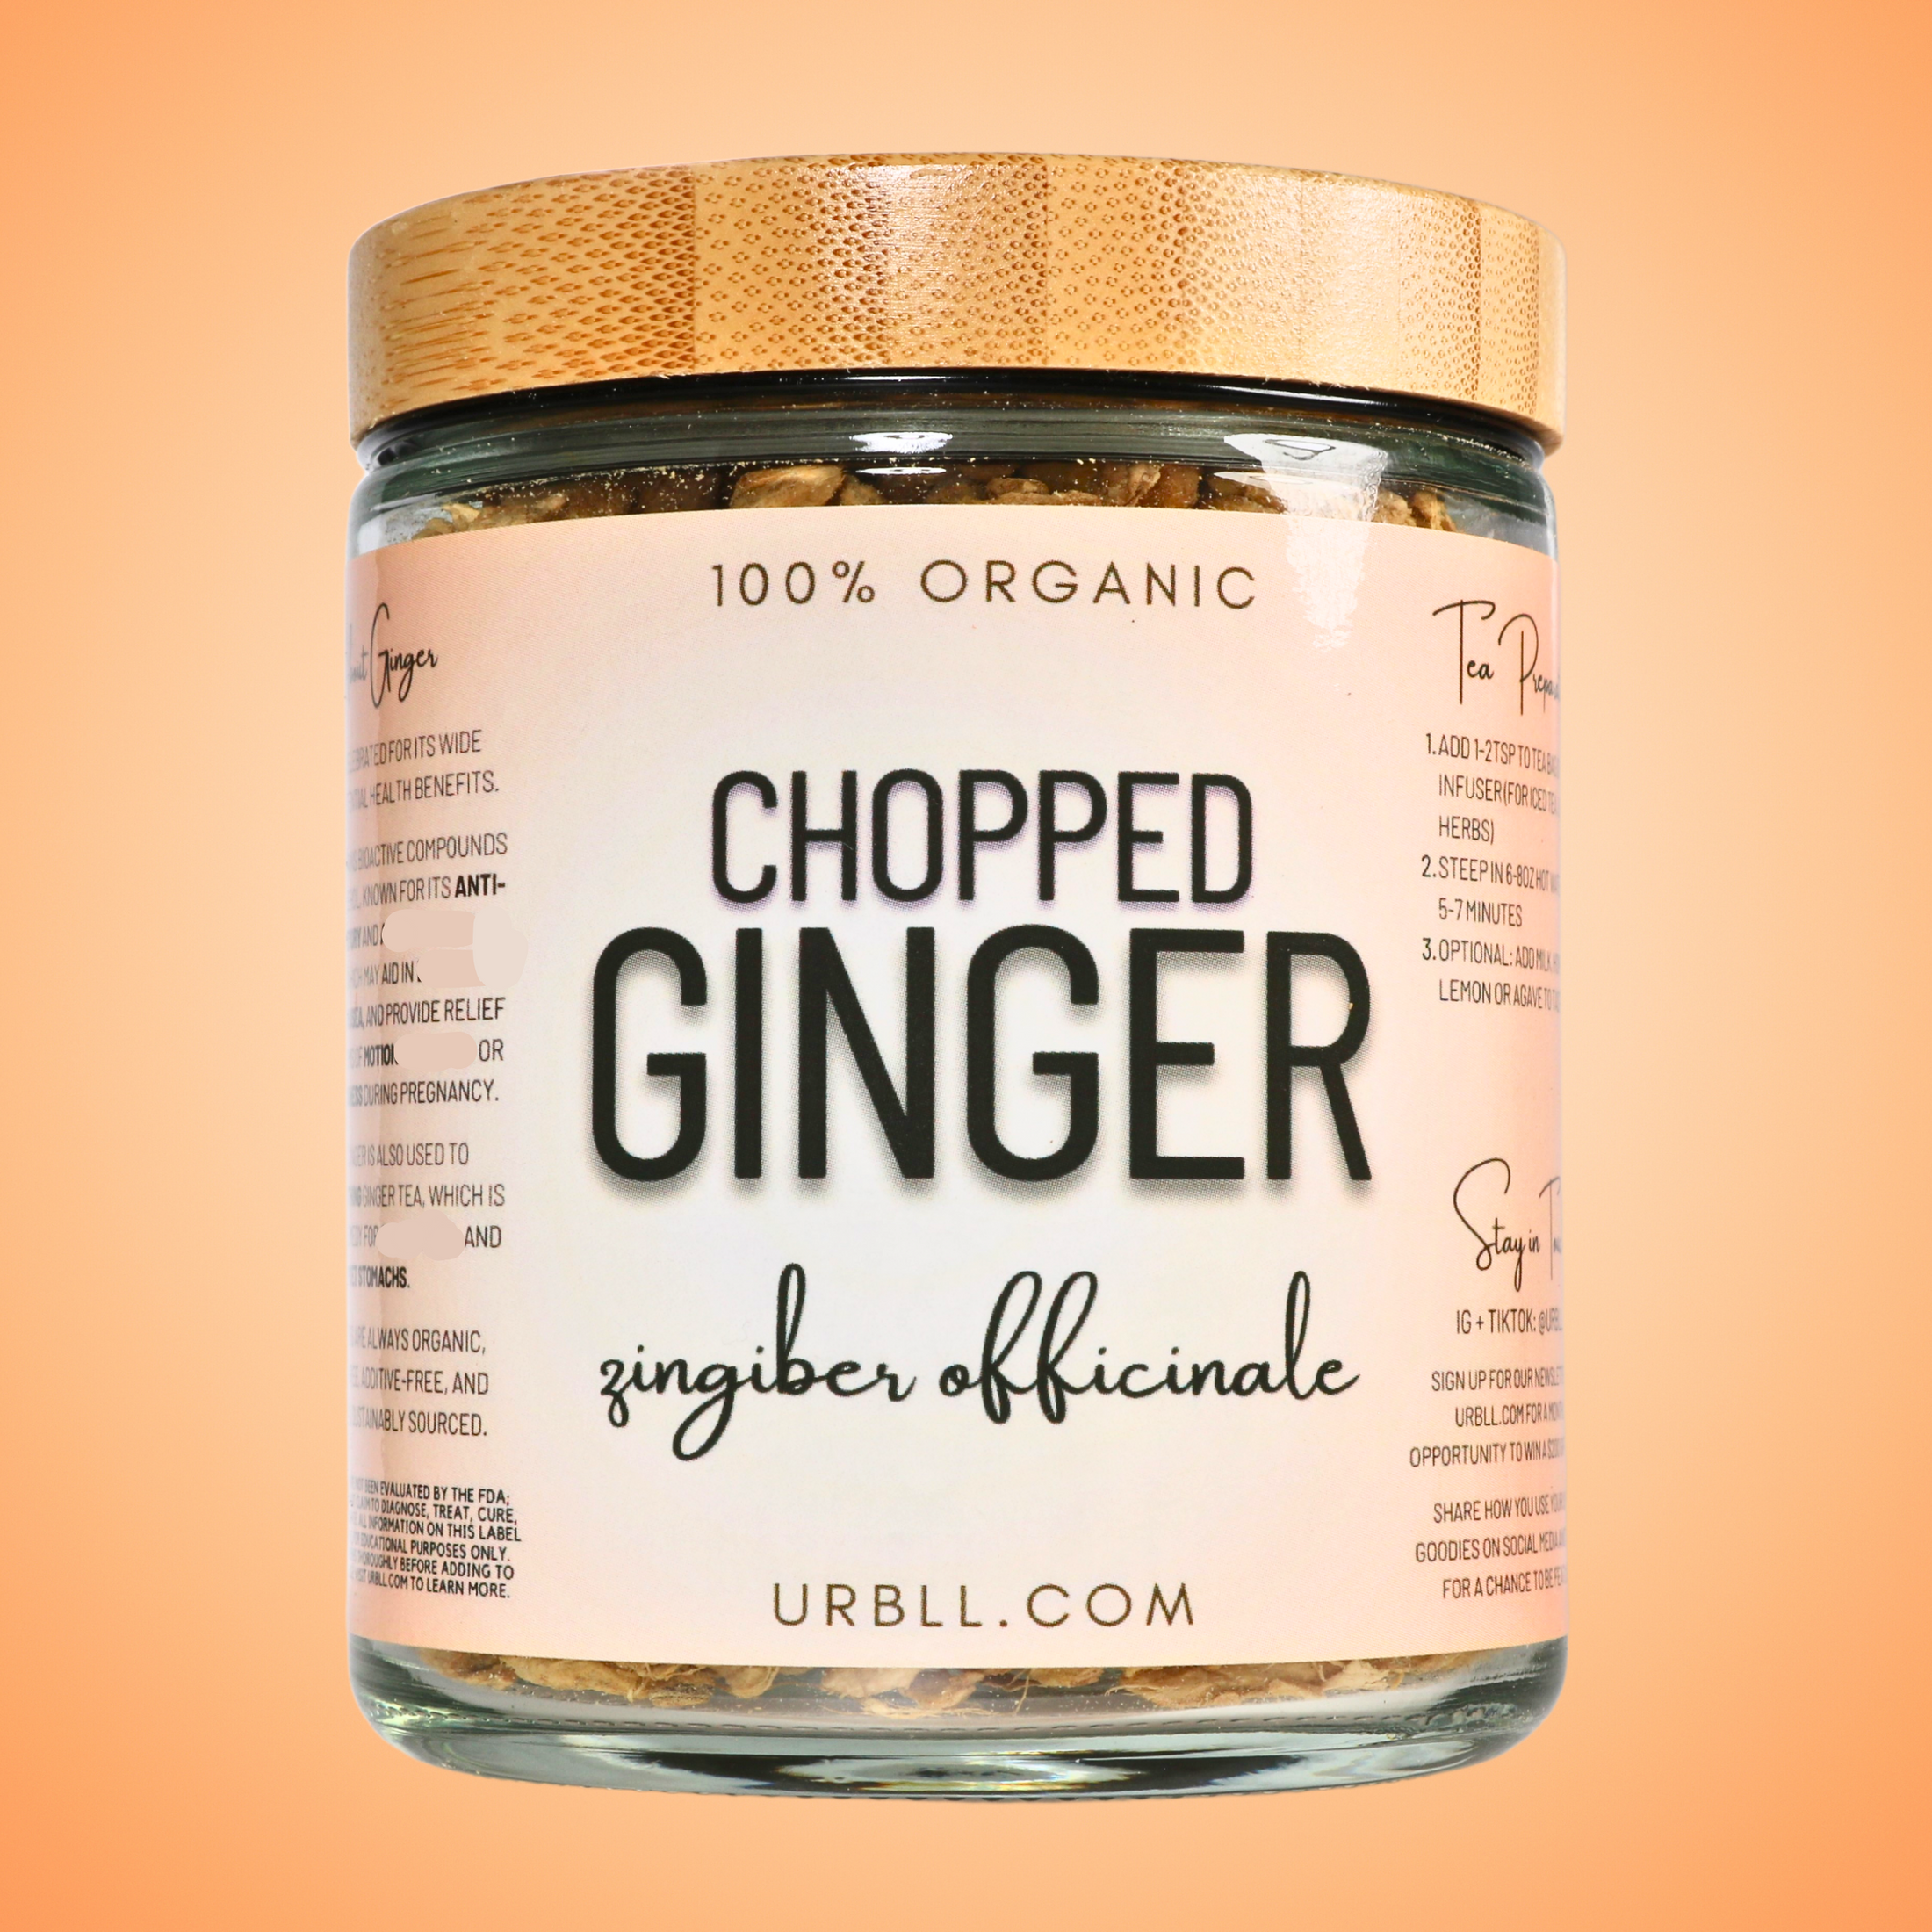 Ginger Root - Organic